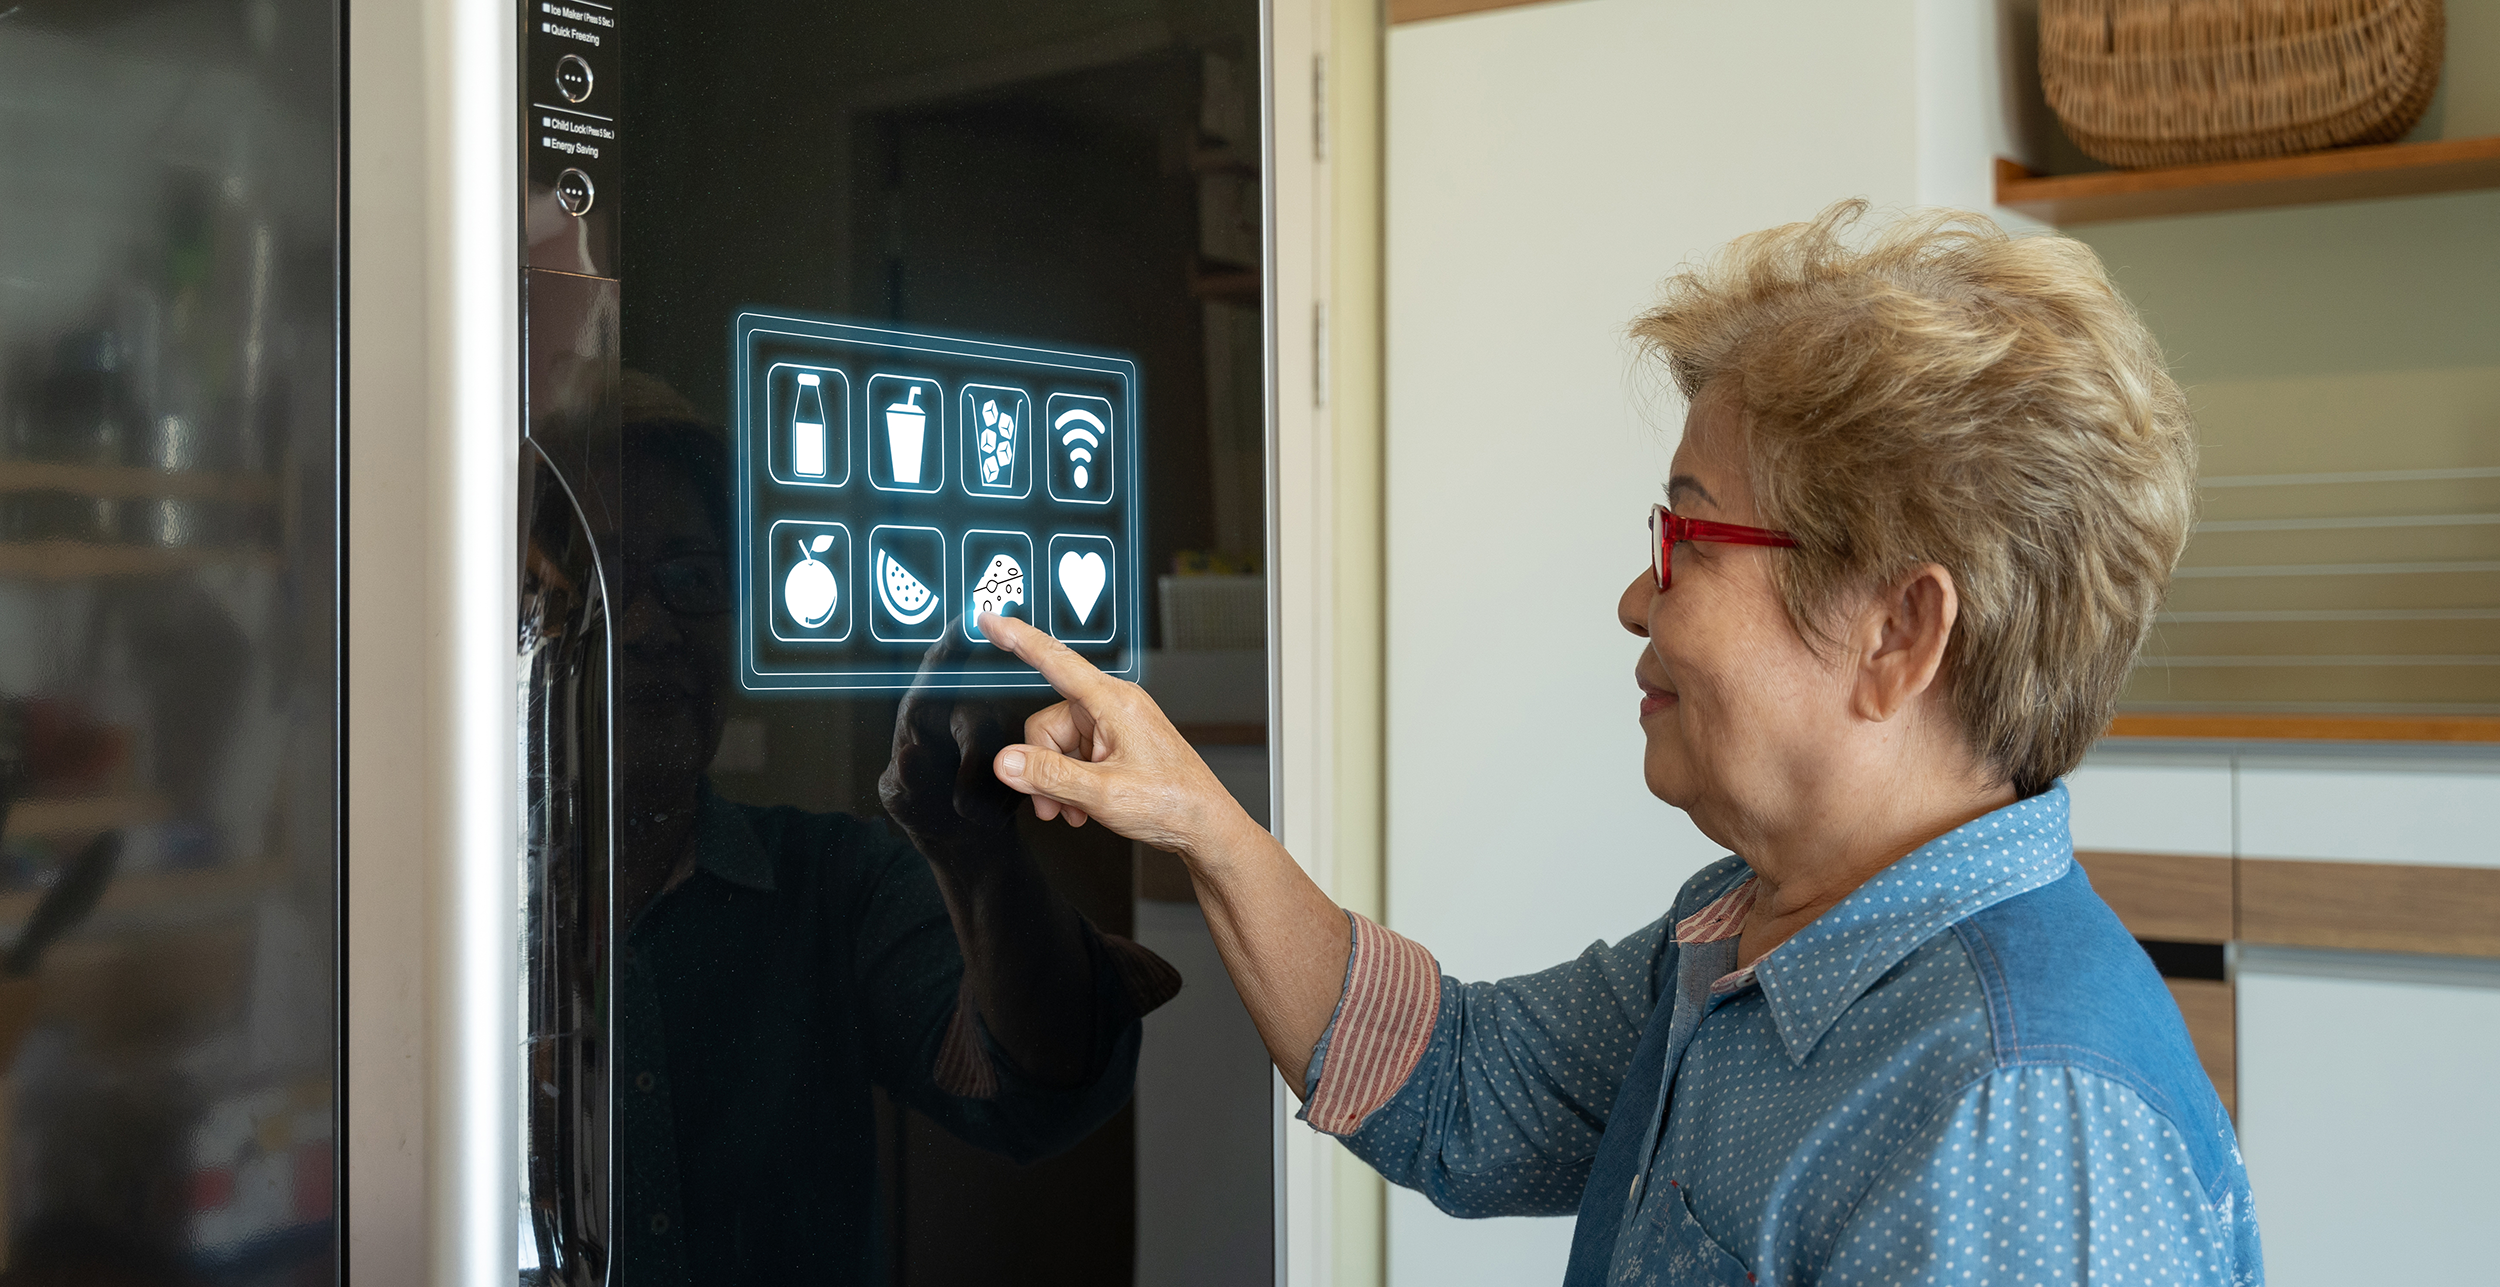 Woman tapping control panel of smart fridge